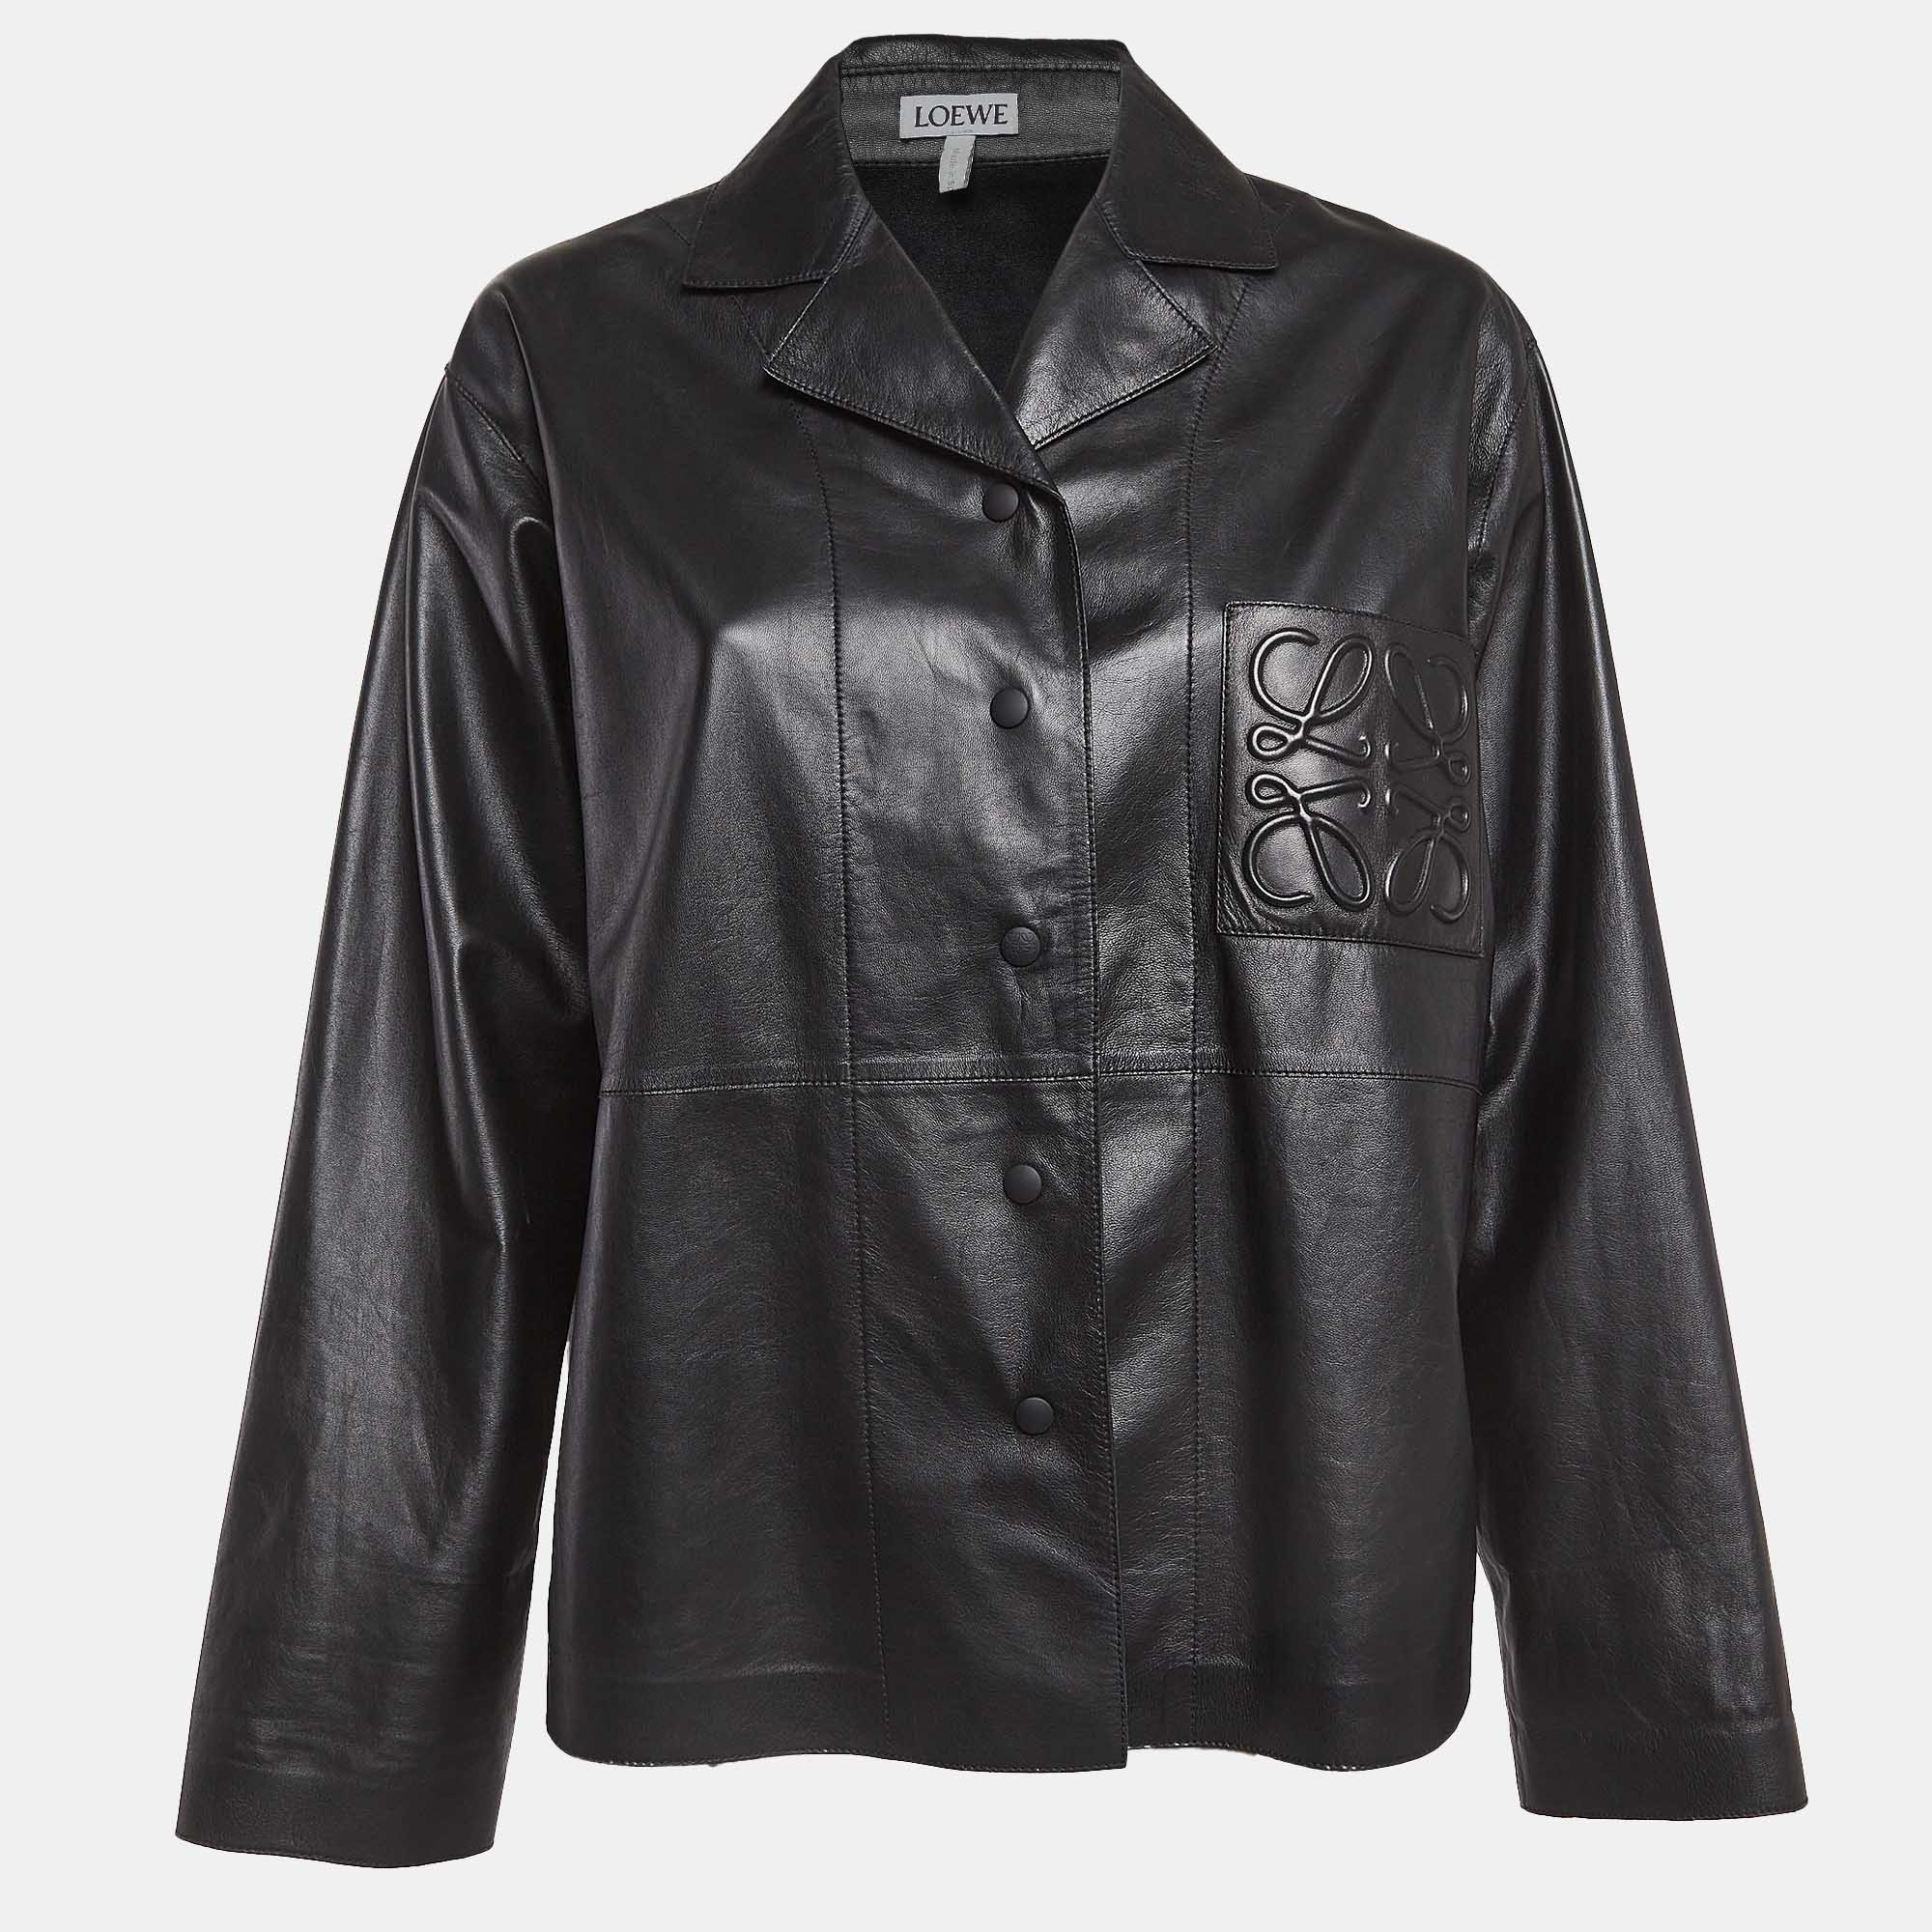 Loewe black leather anagram detail shirt s